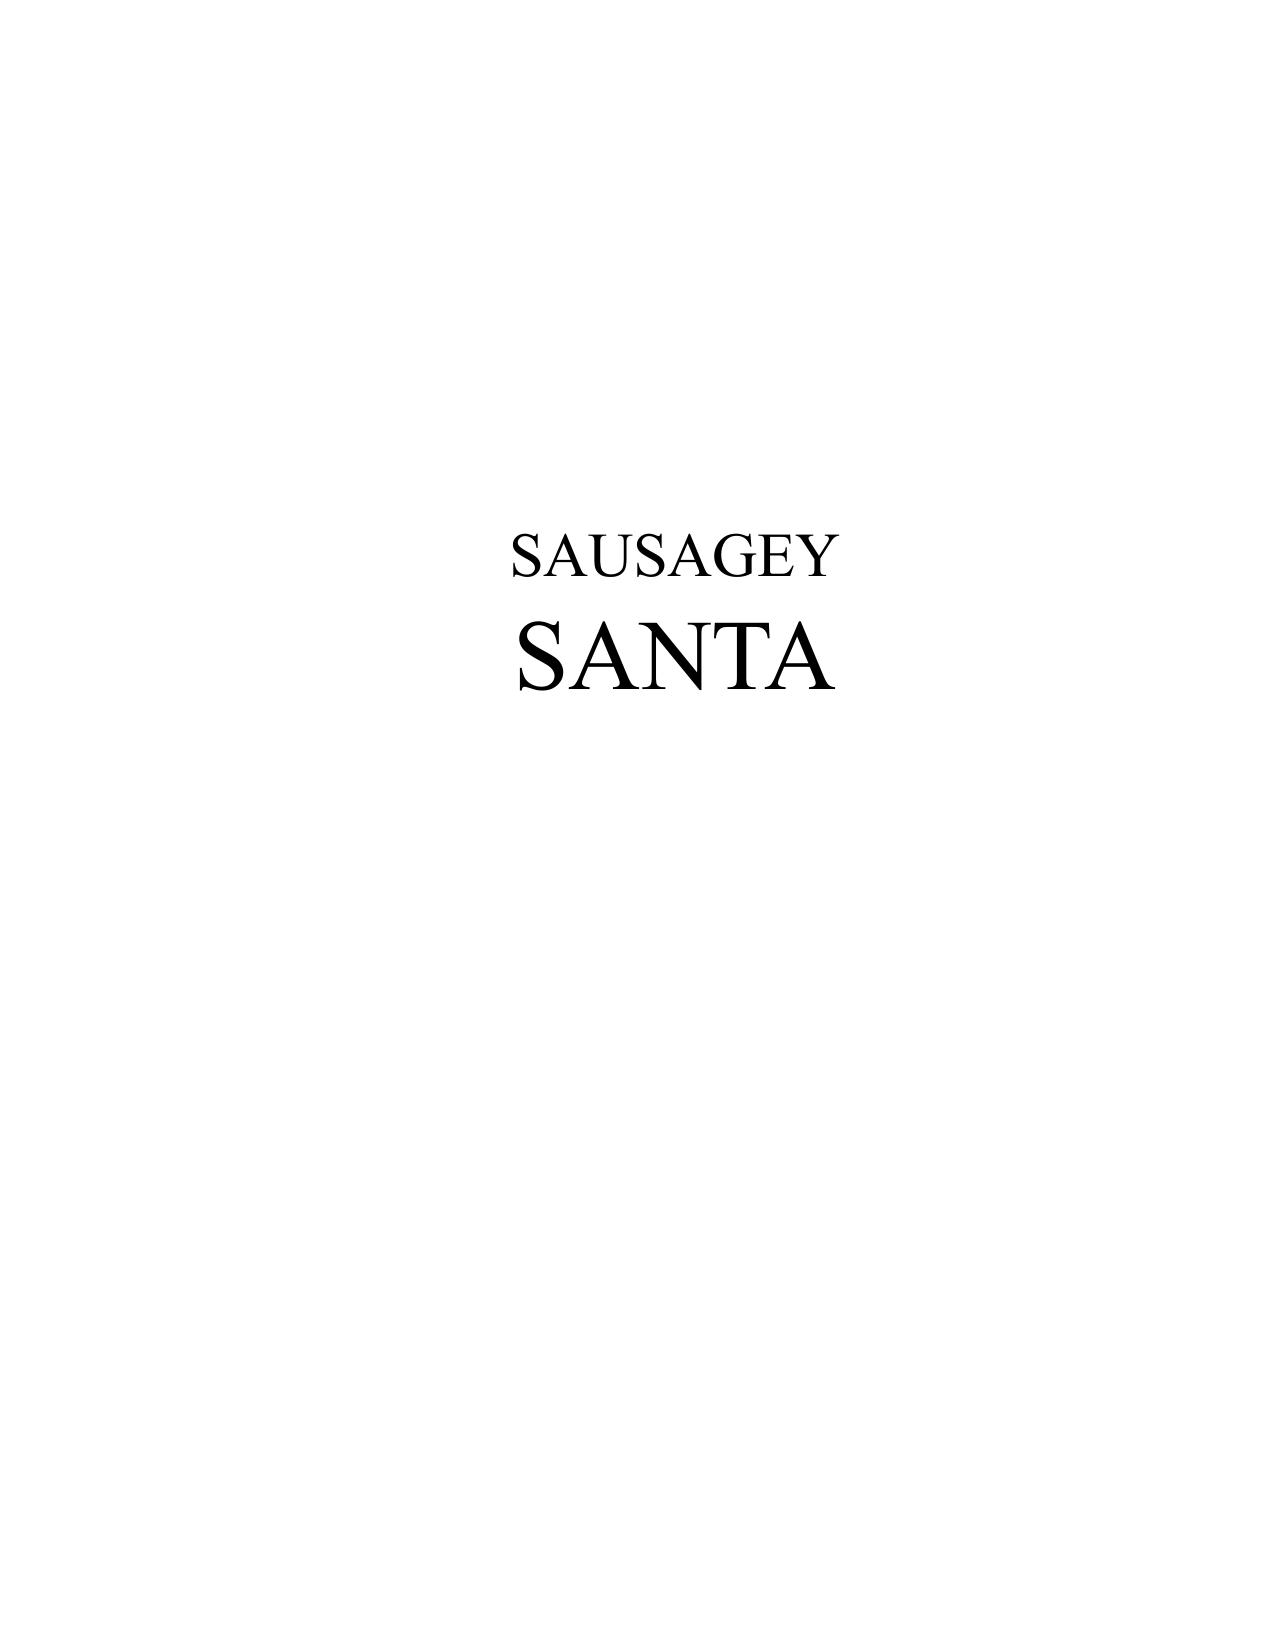 Sausagey Santa by Carlton Mellick III